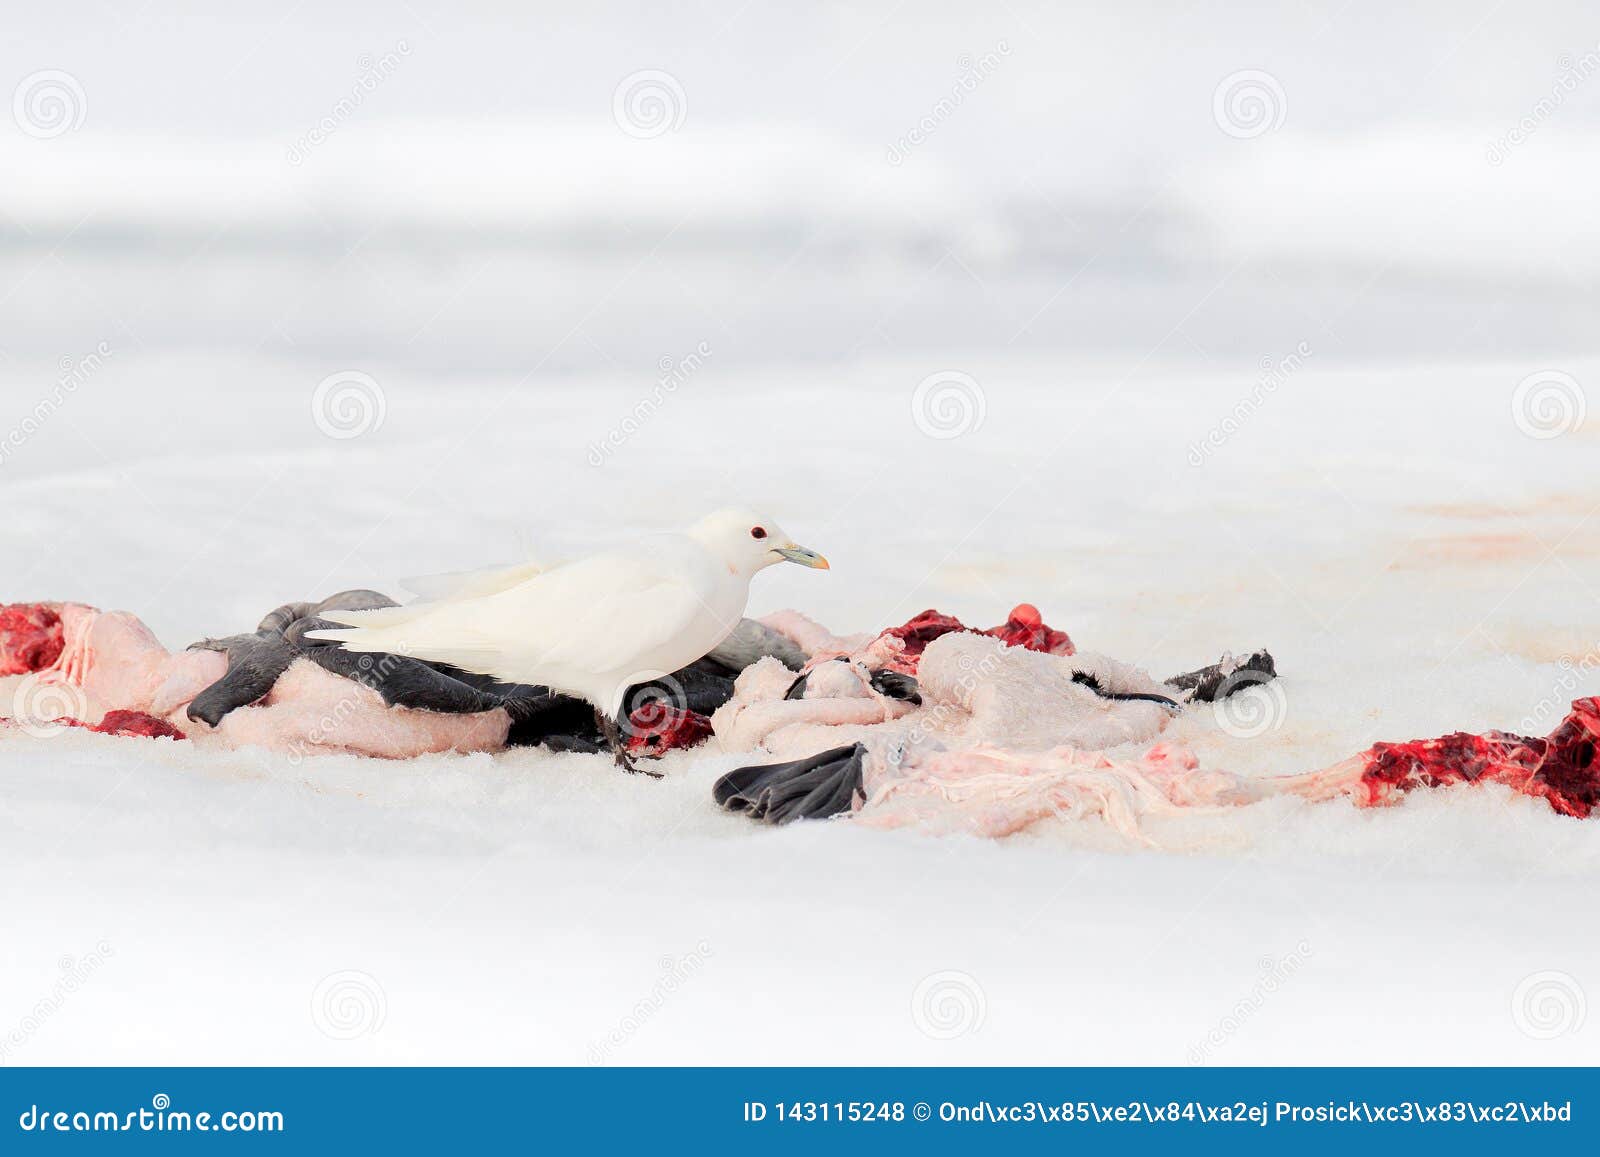 ivory gull, pagophila eburnea, on the ice with snow. seal carcass with white gull, polar bear kill. bird feeding blood viscera in